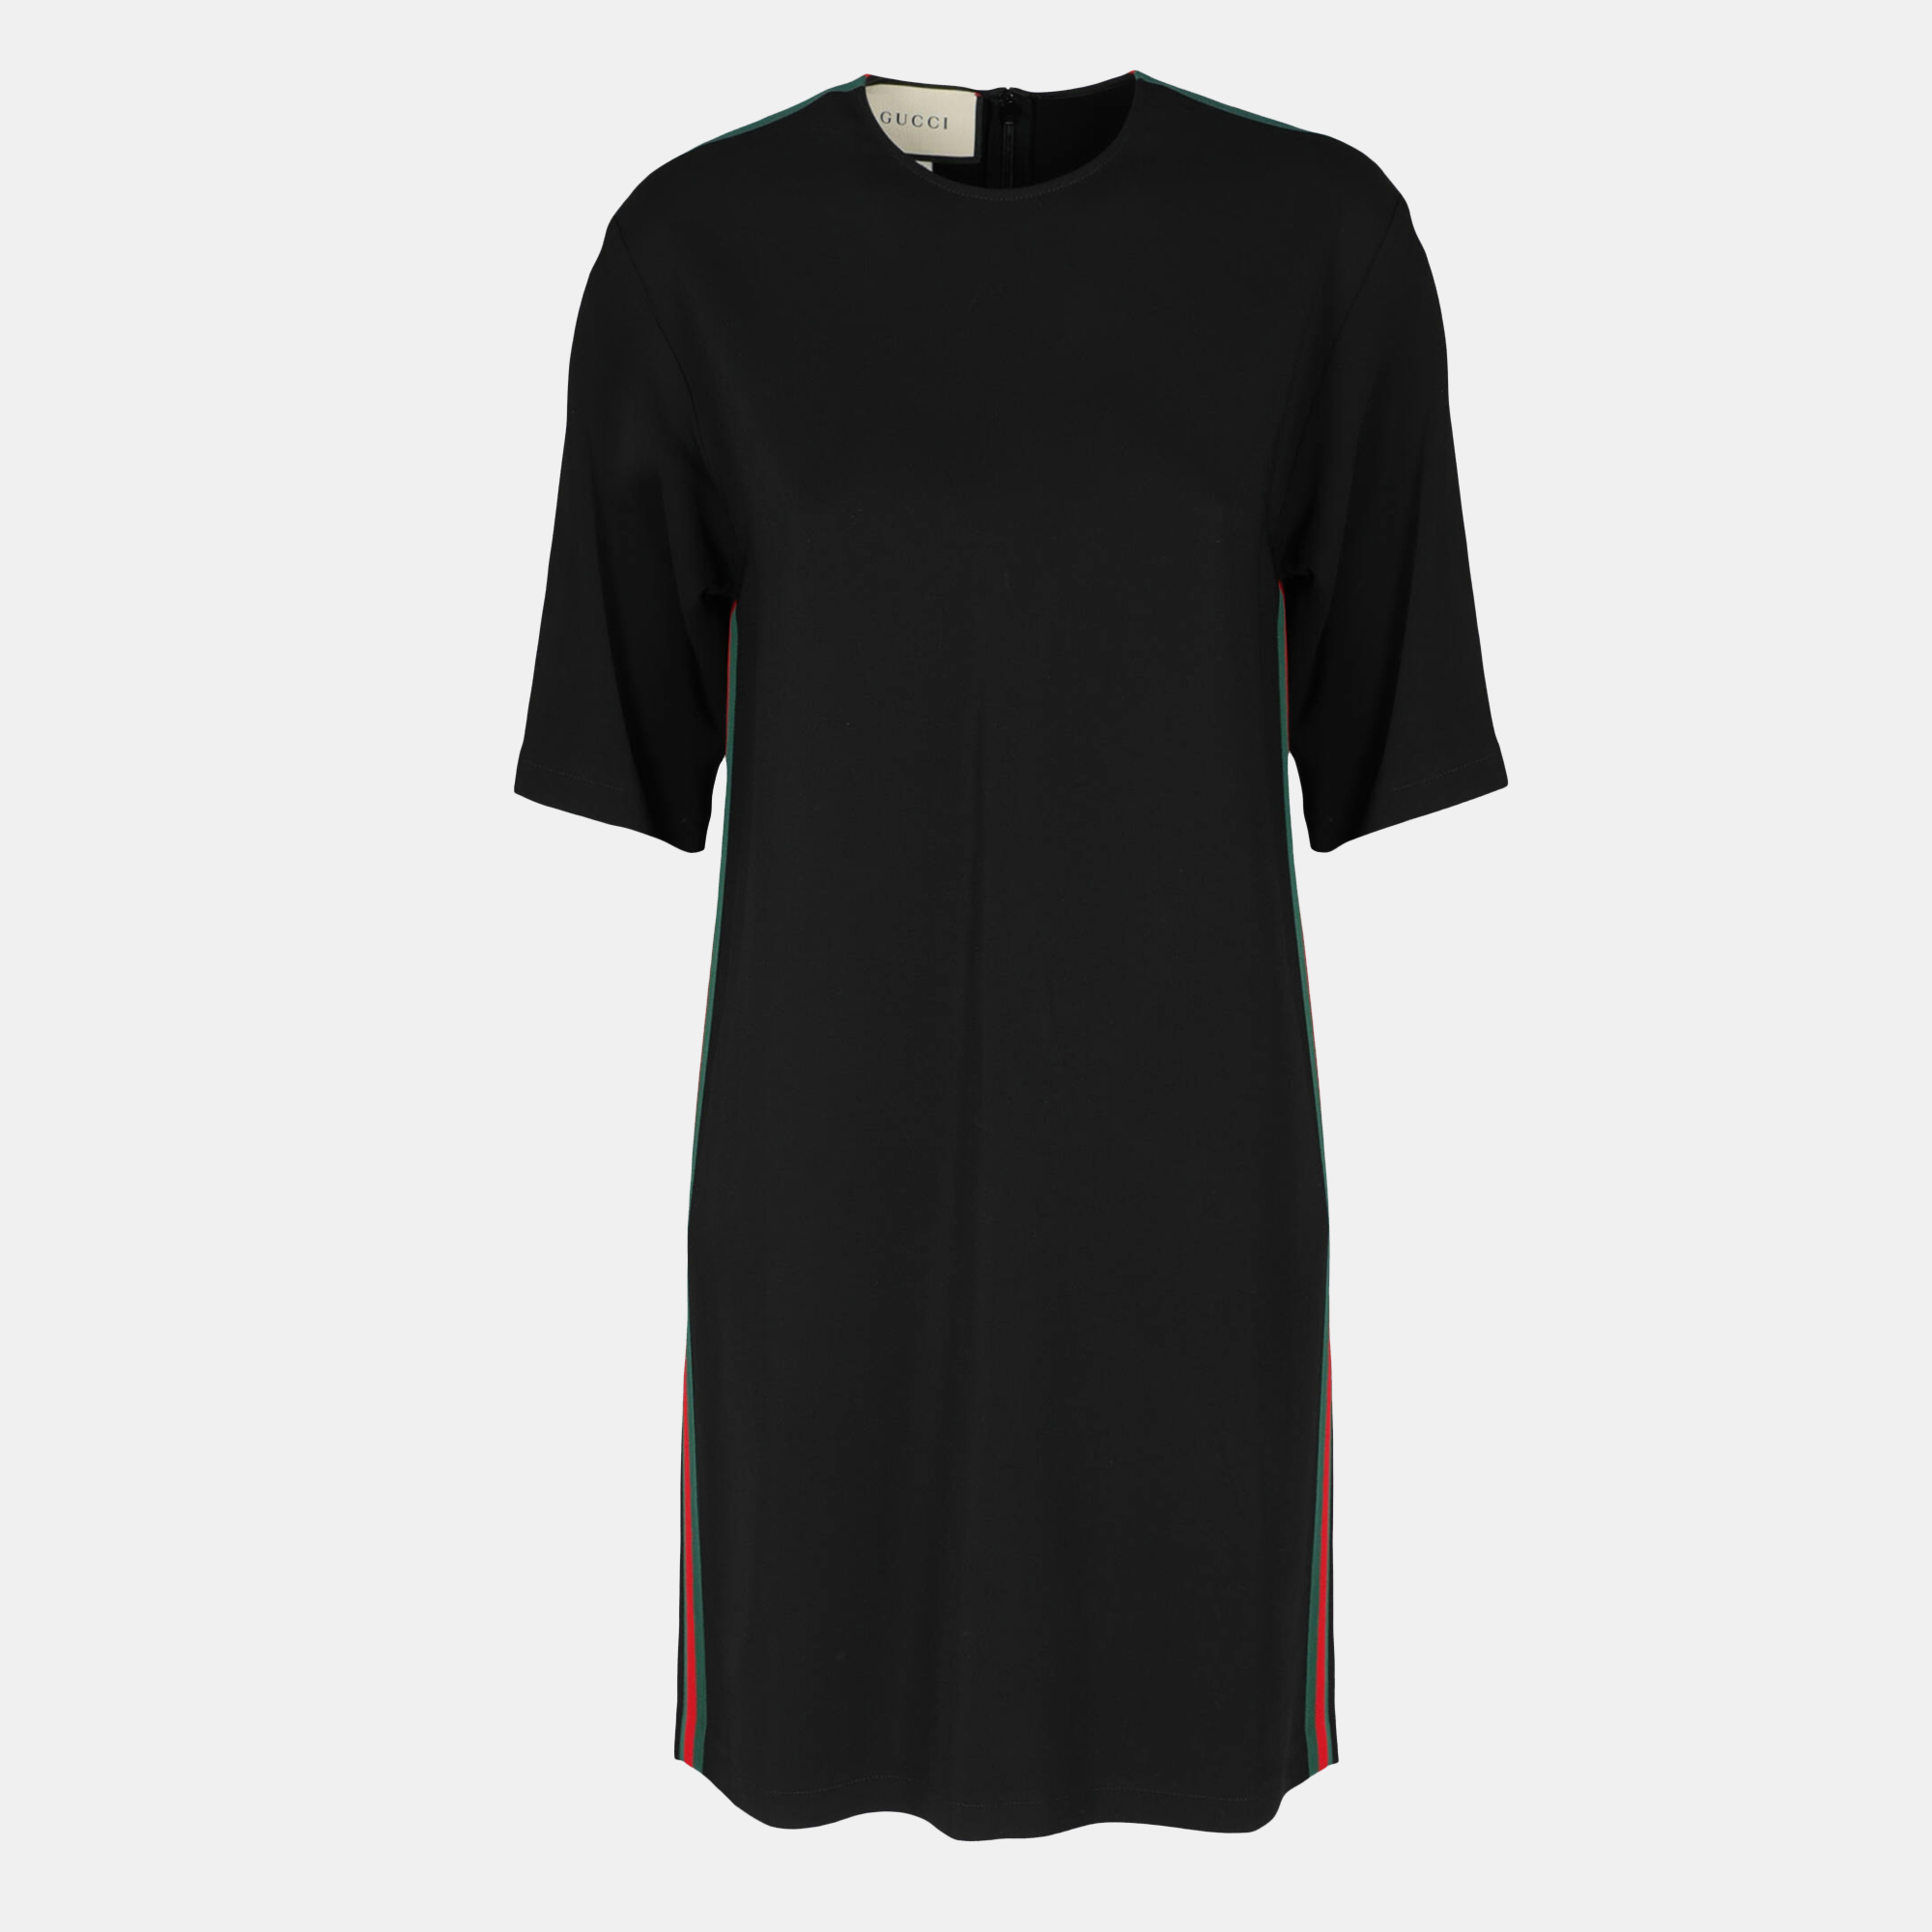 Gucci  Women's Synthetic Fibers Midi Dress - Black - XS